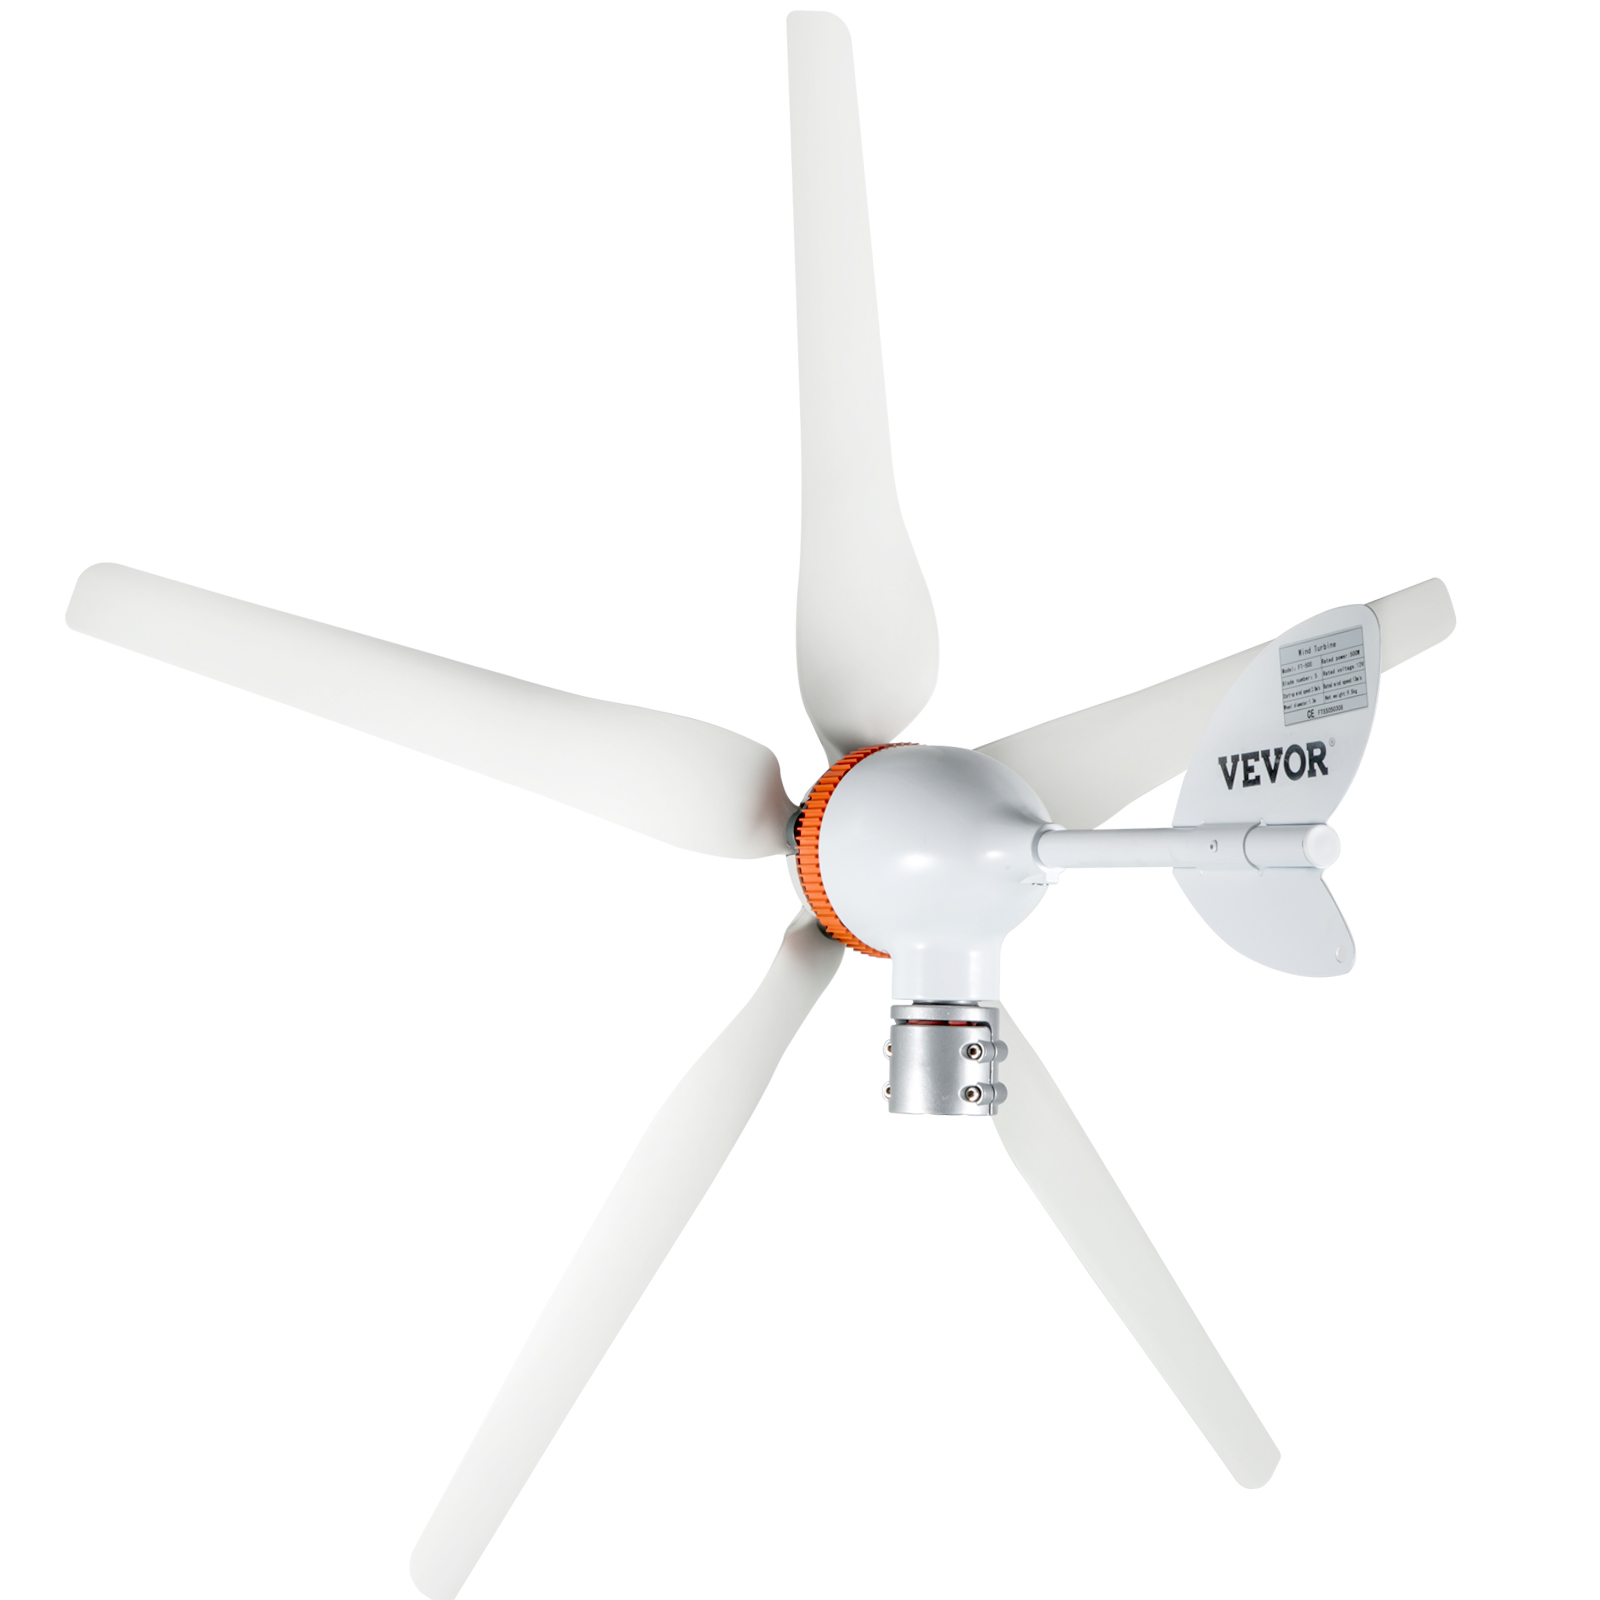 VEVOR Windgenerator Windkraftanlage 300W-500W